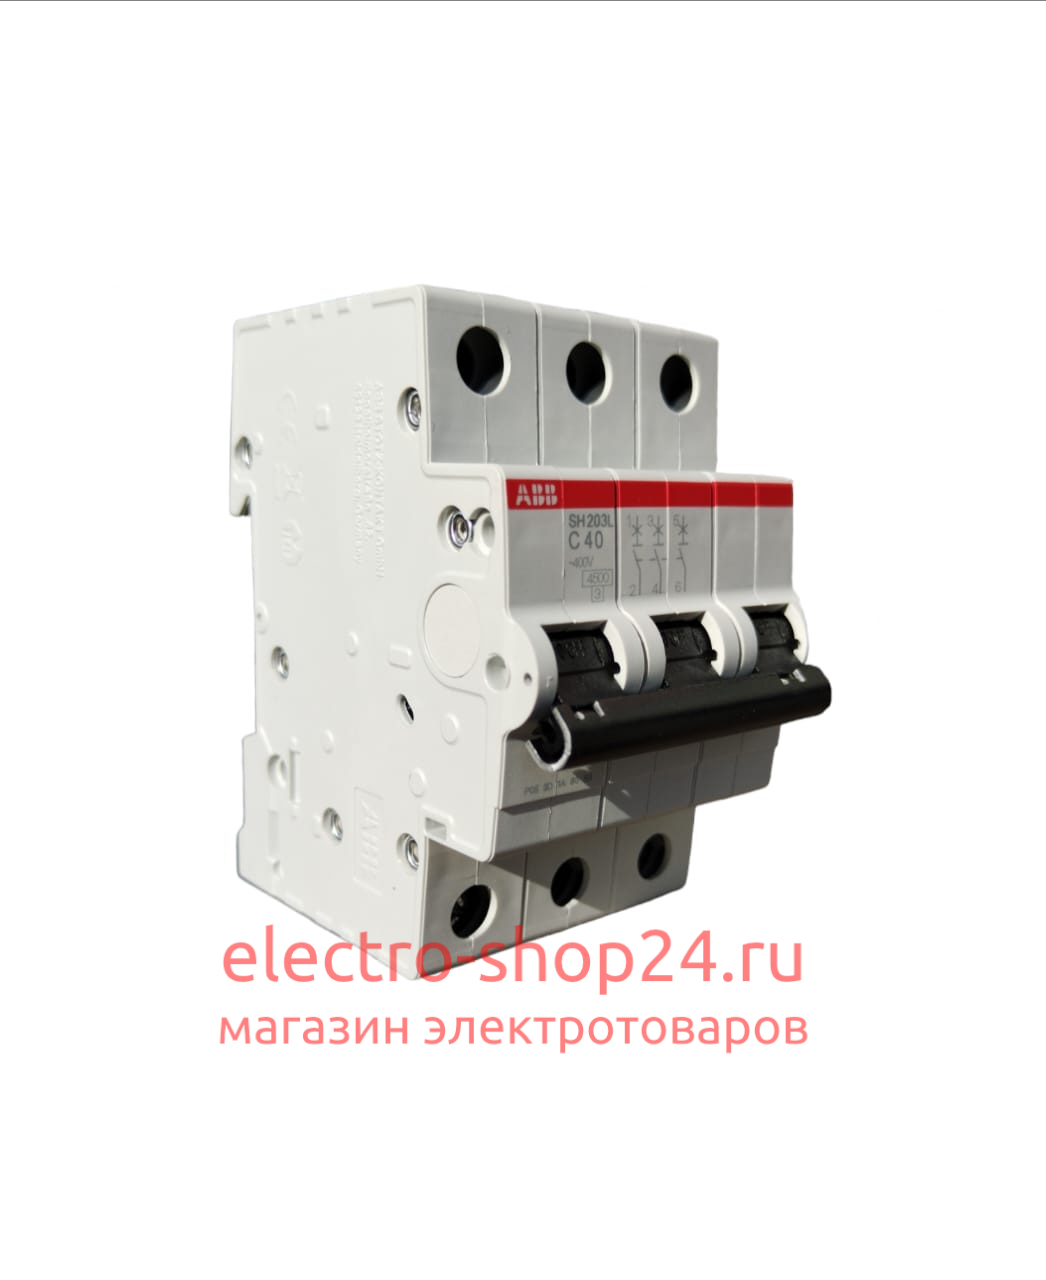 SH203L C40 Автоматический выключатель 3-полюсный 40А 4,5кА (хар-ка C) ABB 2CDS243001R0404 2CDS243001R0404 - магазин электротехники Electroshop